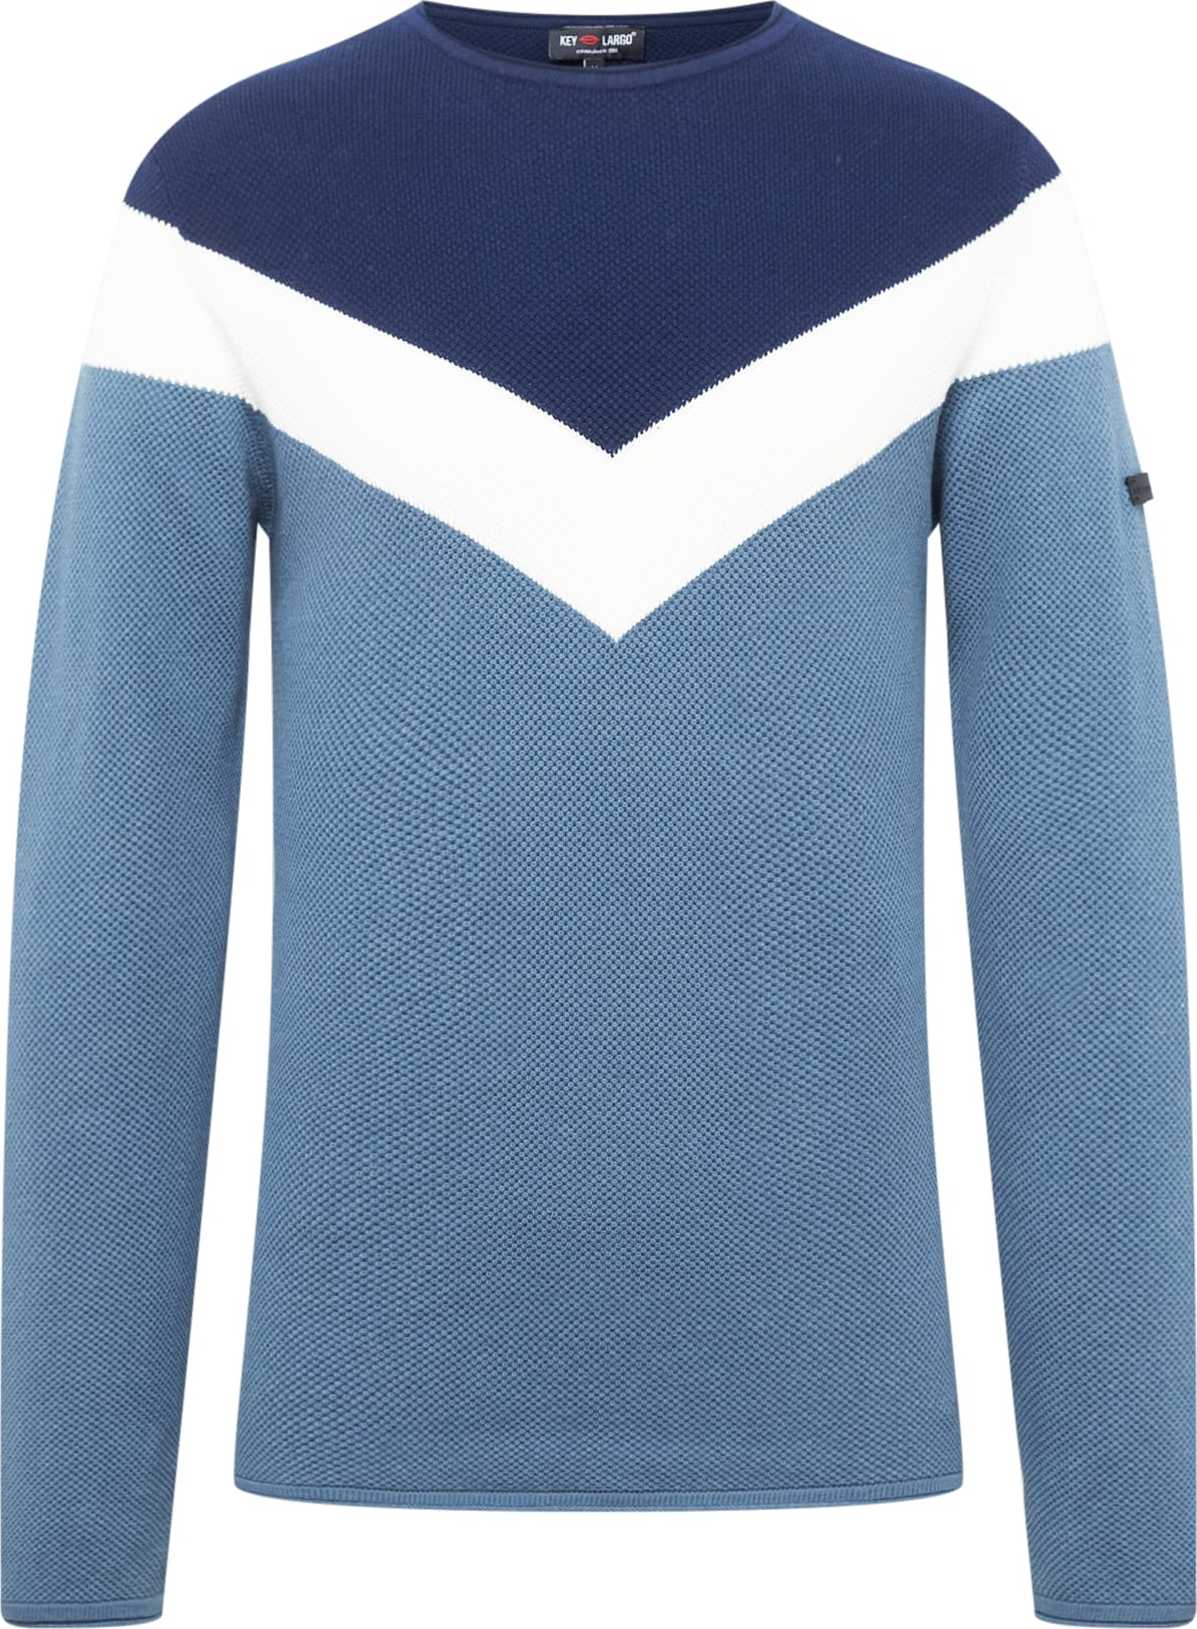 Svetr 'RÜDIGER' Key Largo námořnická modř / chladná modrá / bílá